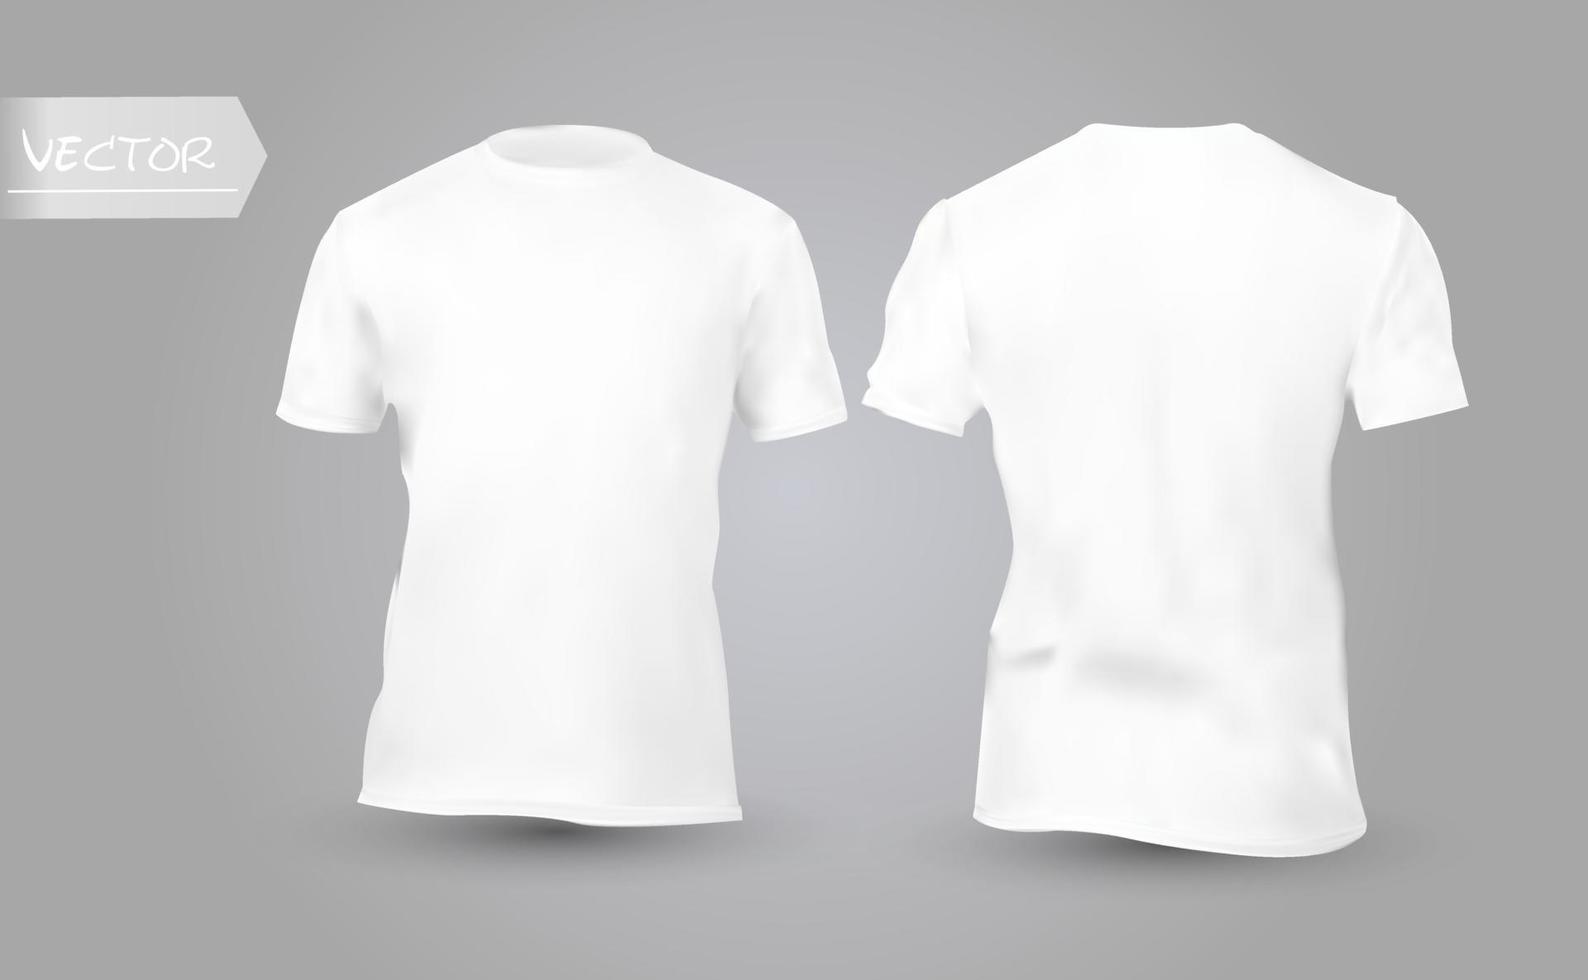 Shirt mock up set. T-shirt template. White version, front design. vector